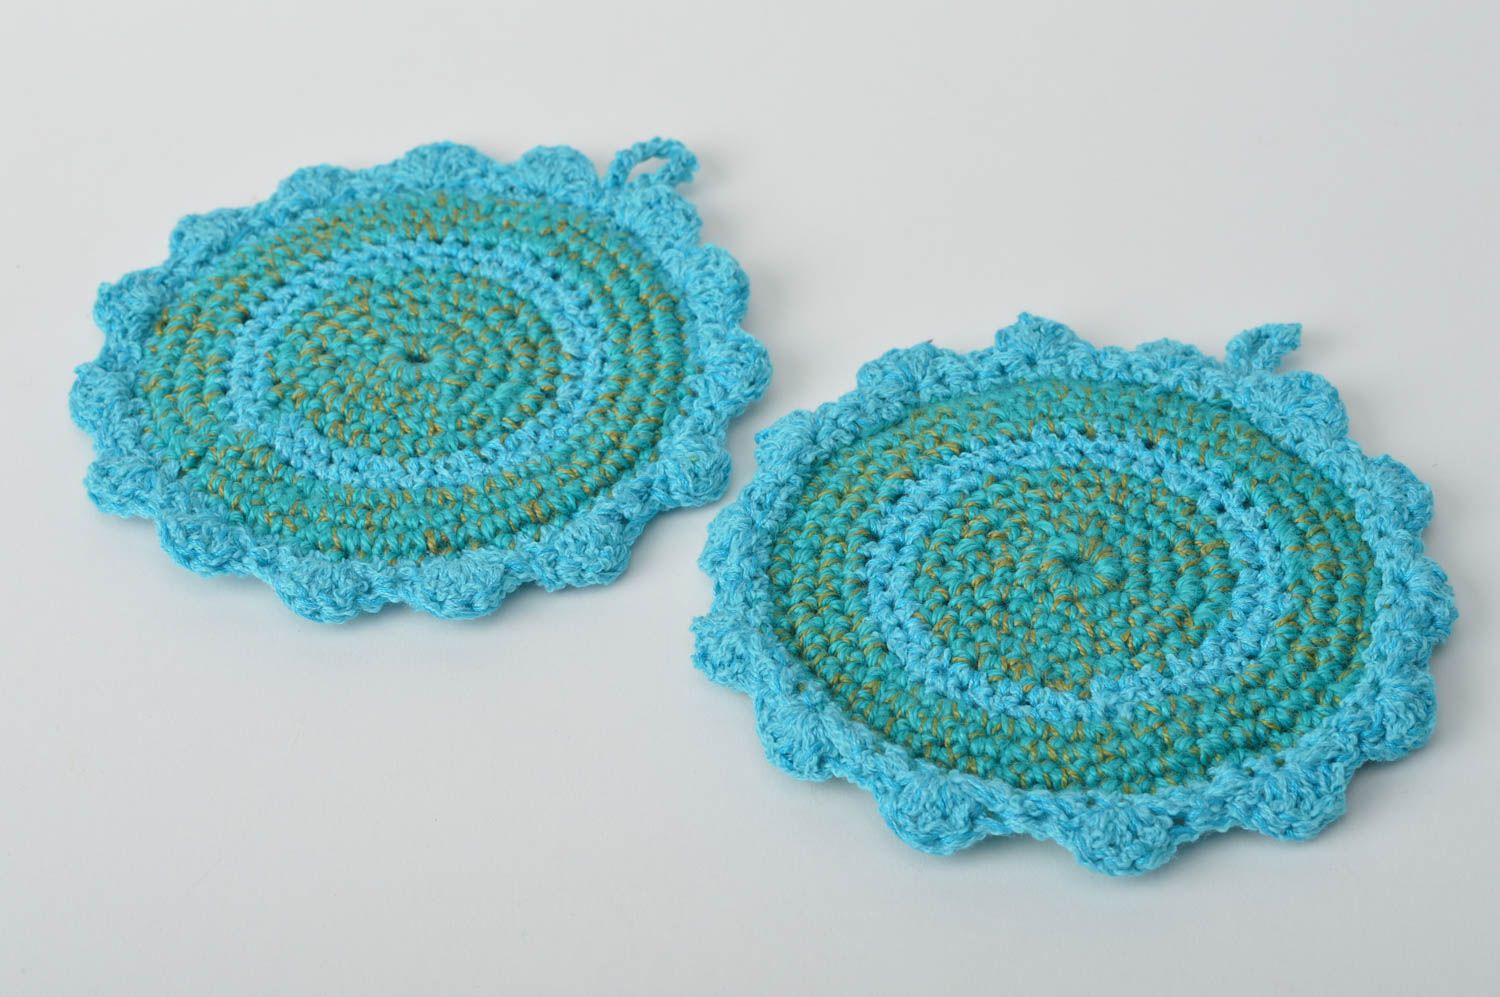 Beautiful handmade crochet potholder home textiles kitchen design gift ideas photo 5